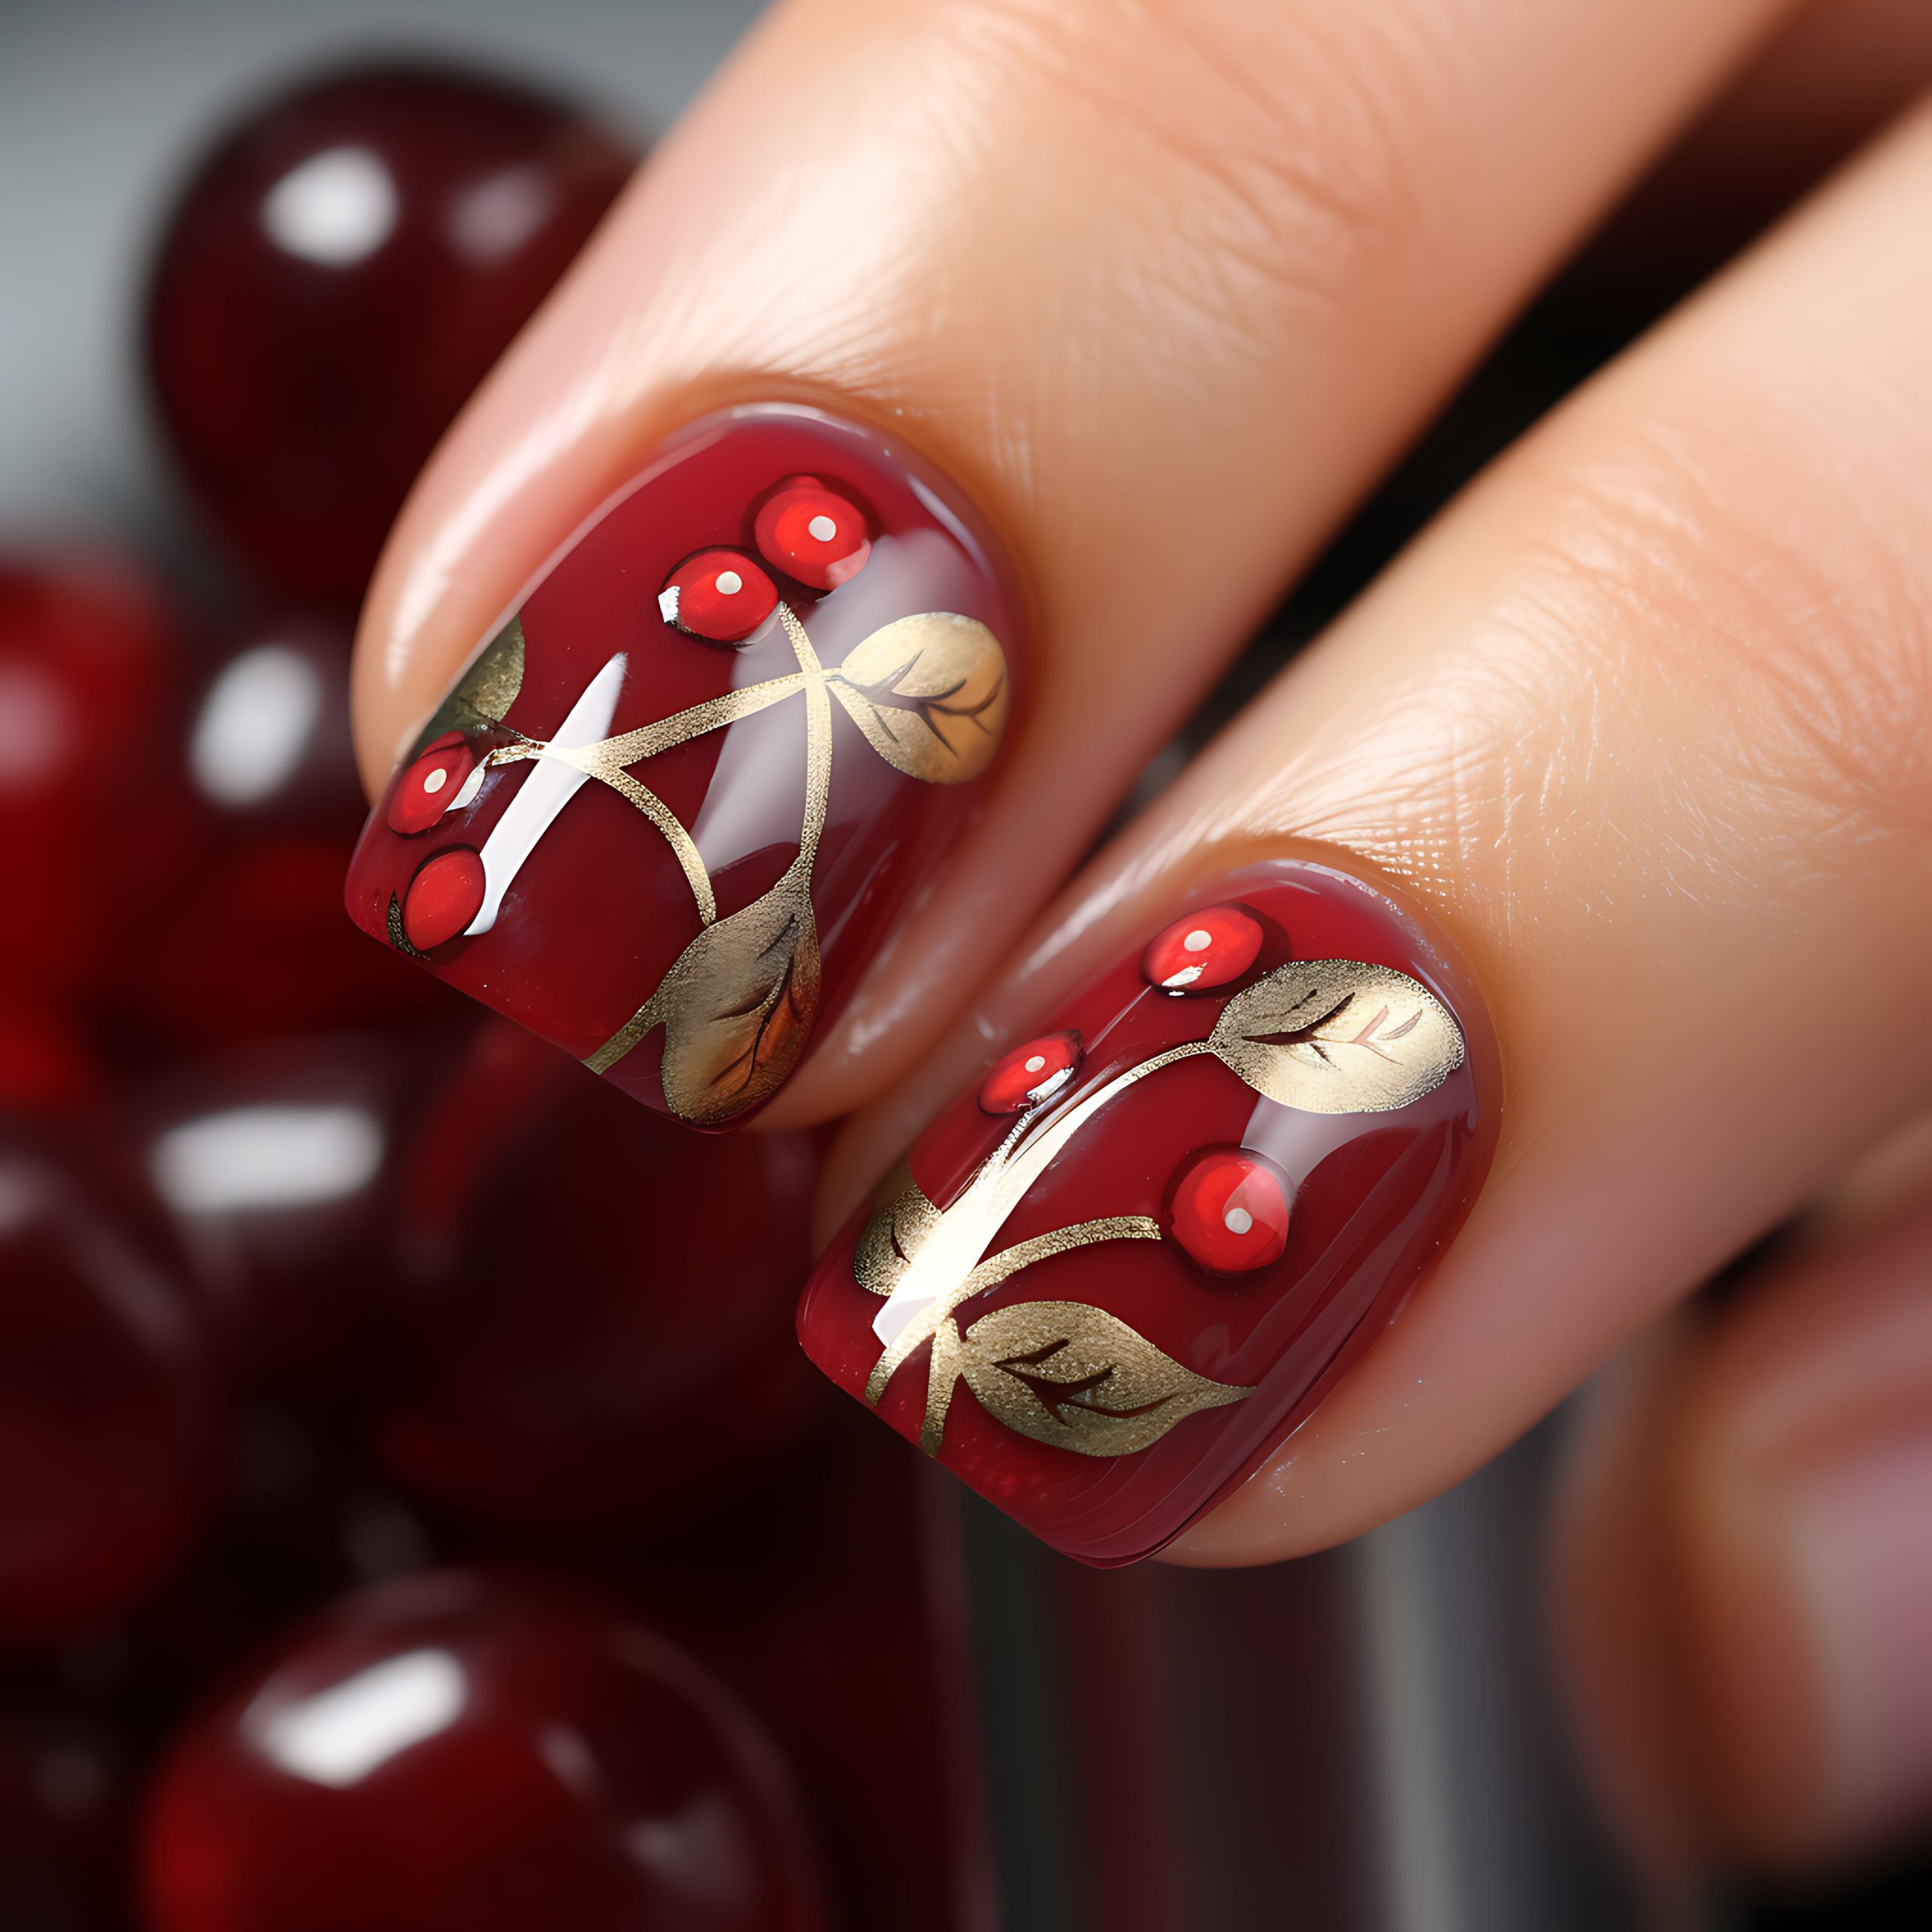 cherry-cola-nails-design-deep-red-brown-shades-macro-len-concept-idea-creative-art-photoshoot-scaled